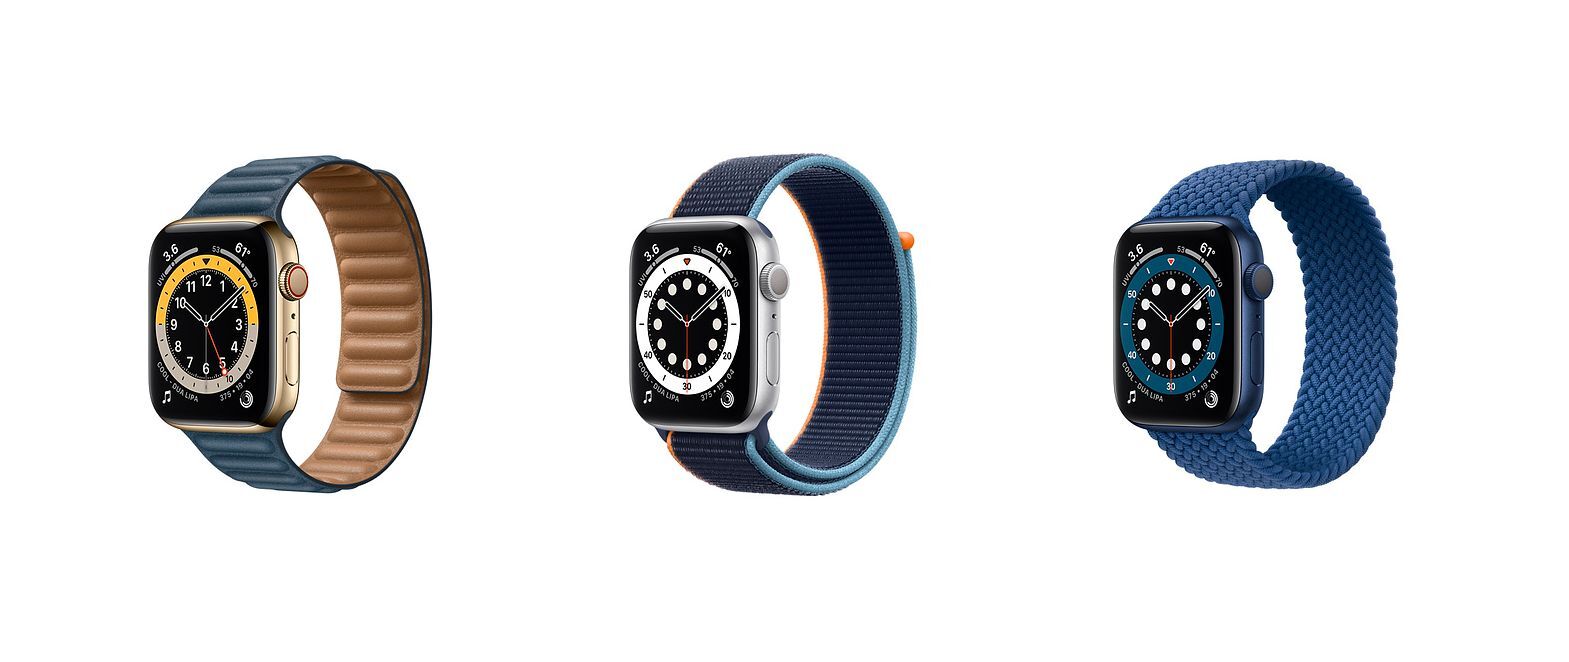 Apple Watch Series 6: Stainless steel vs aluminum